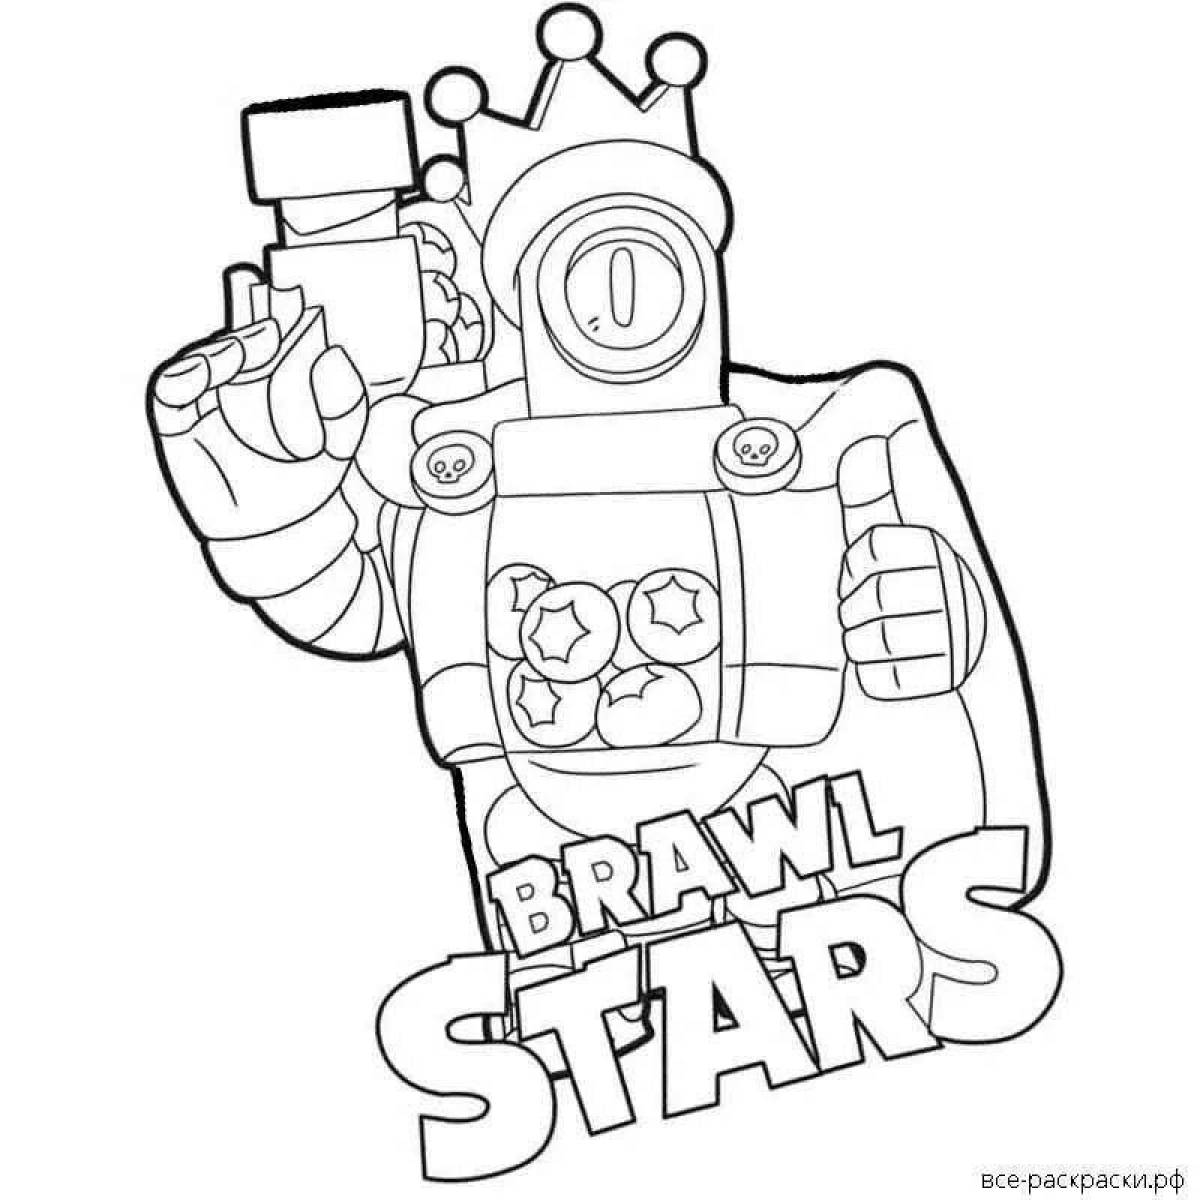 Bravo stars logo #4